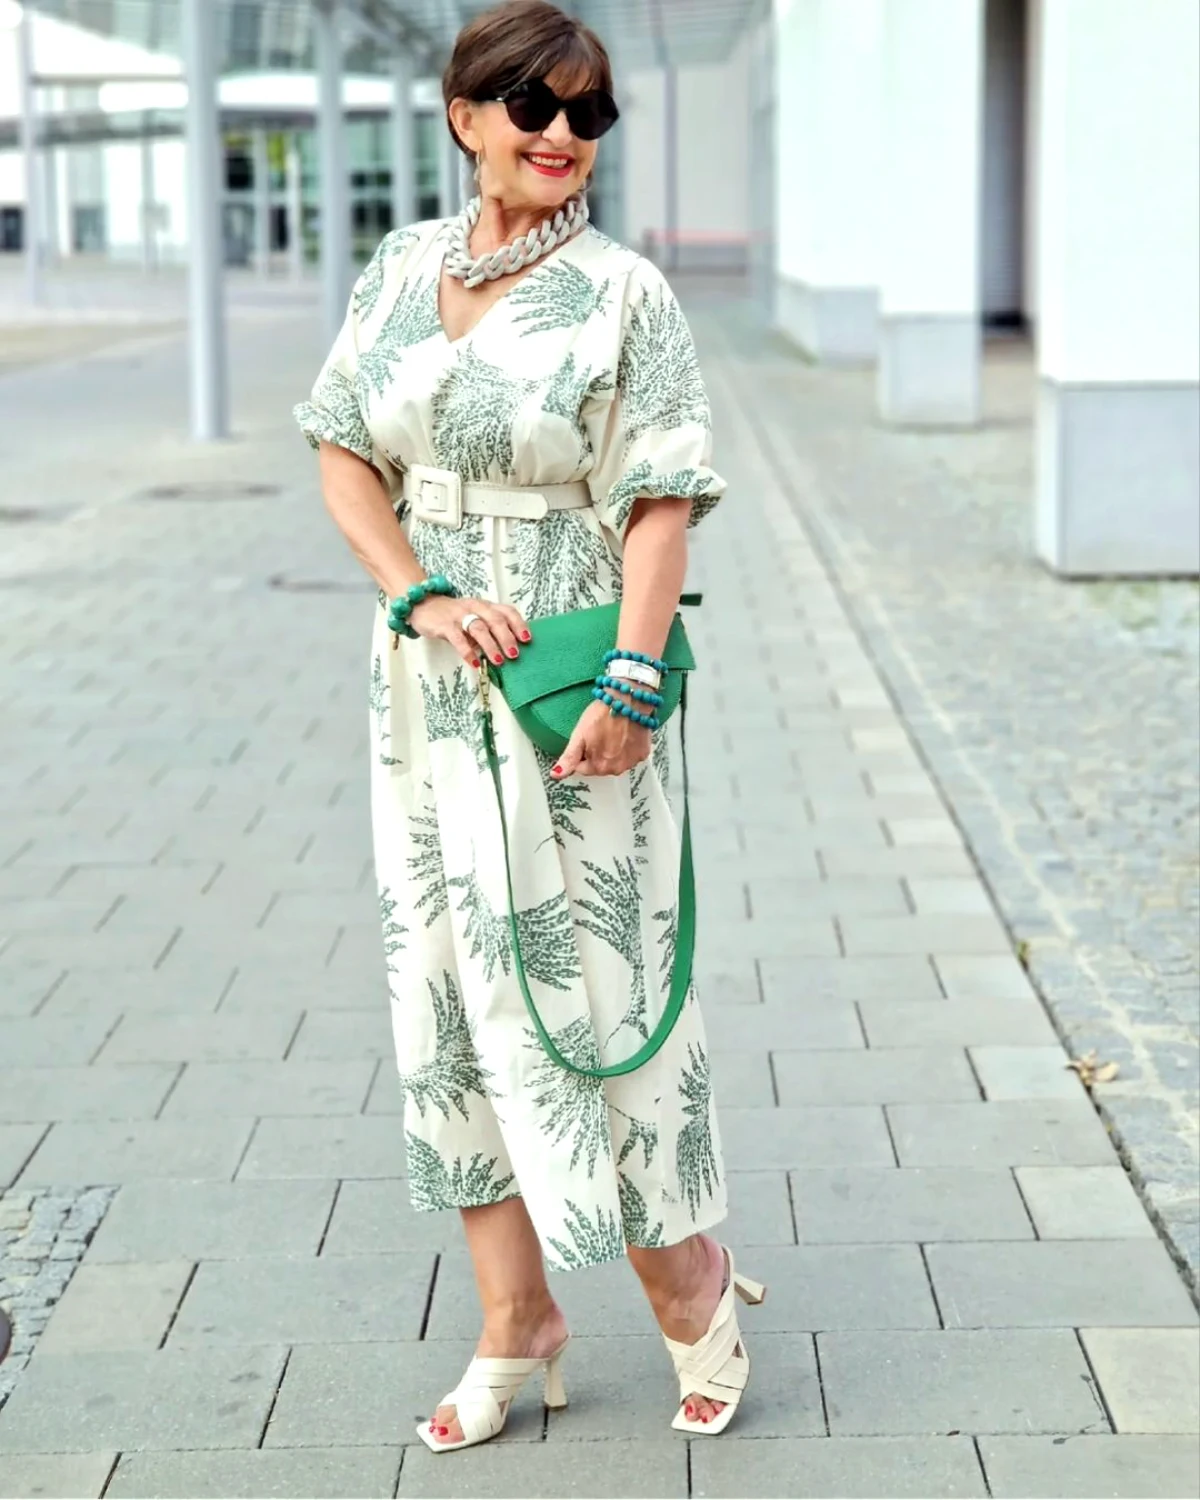 robe longue blanche femme 60 ans sac et bijoux verts rue